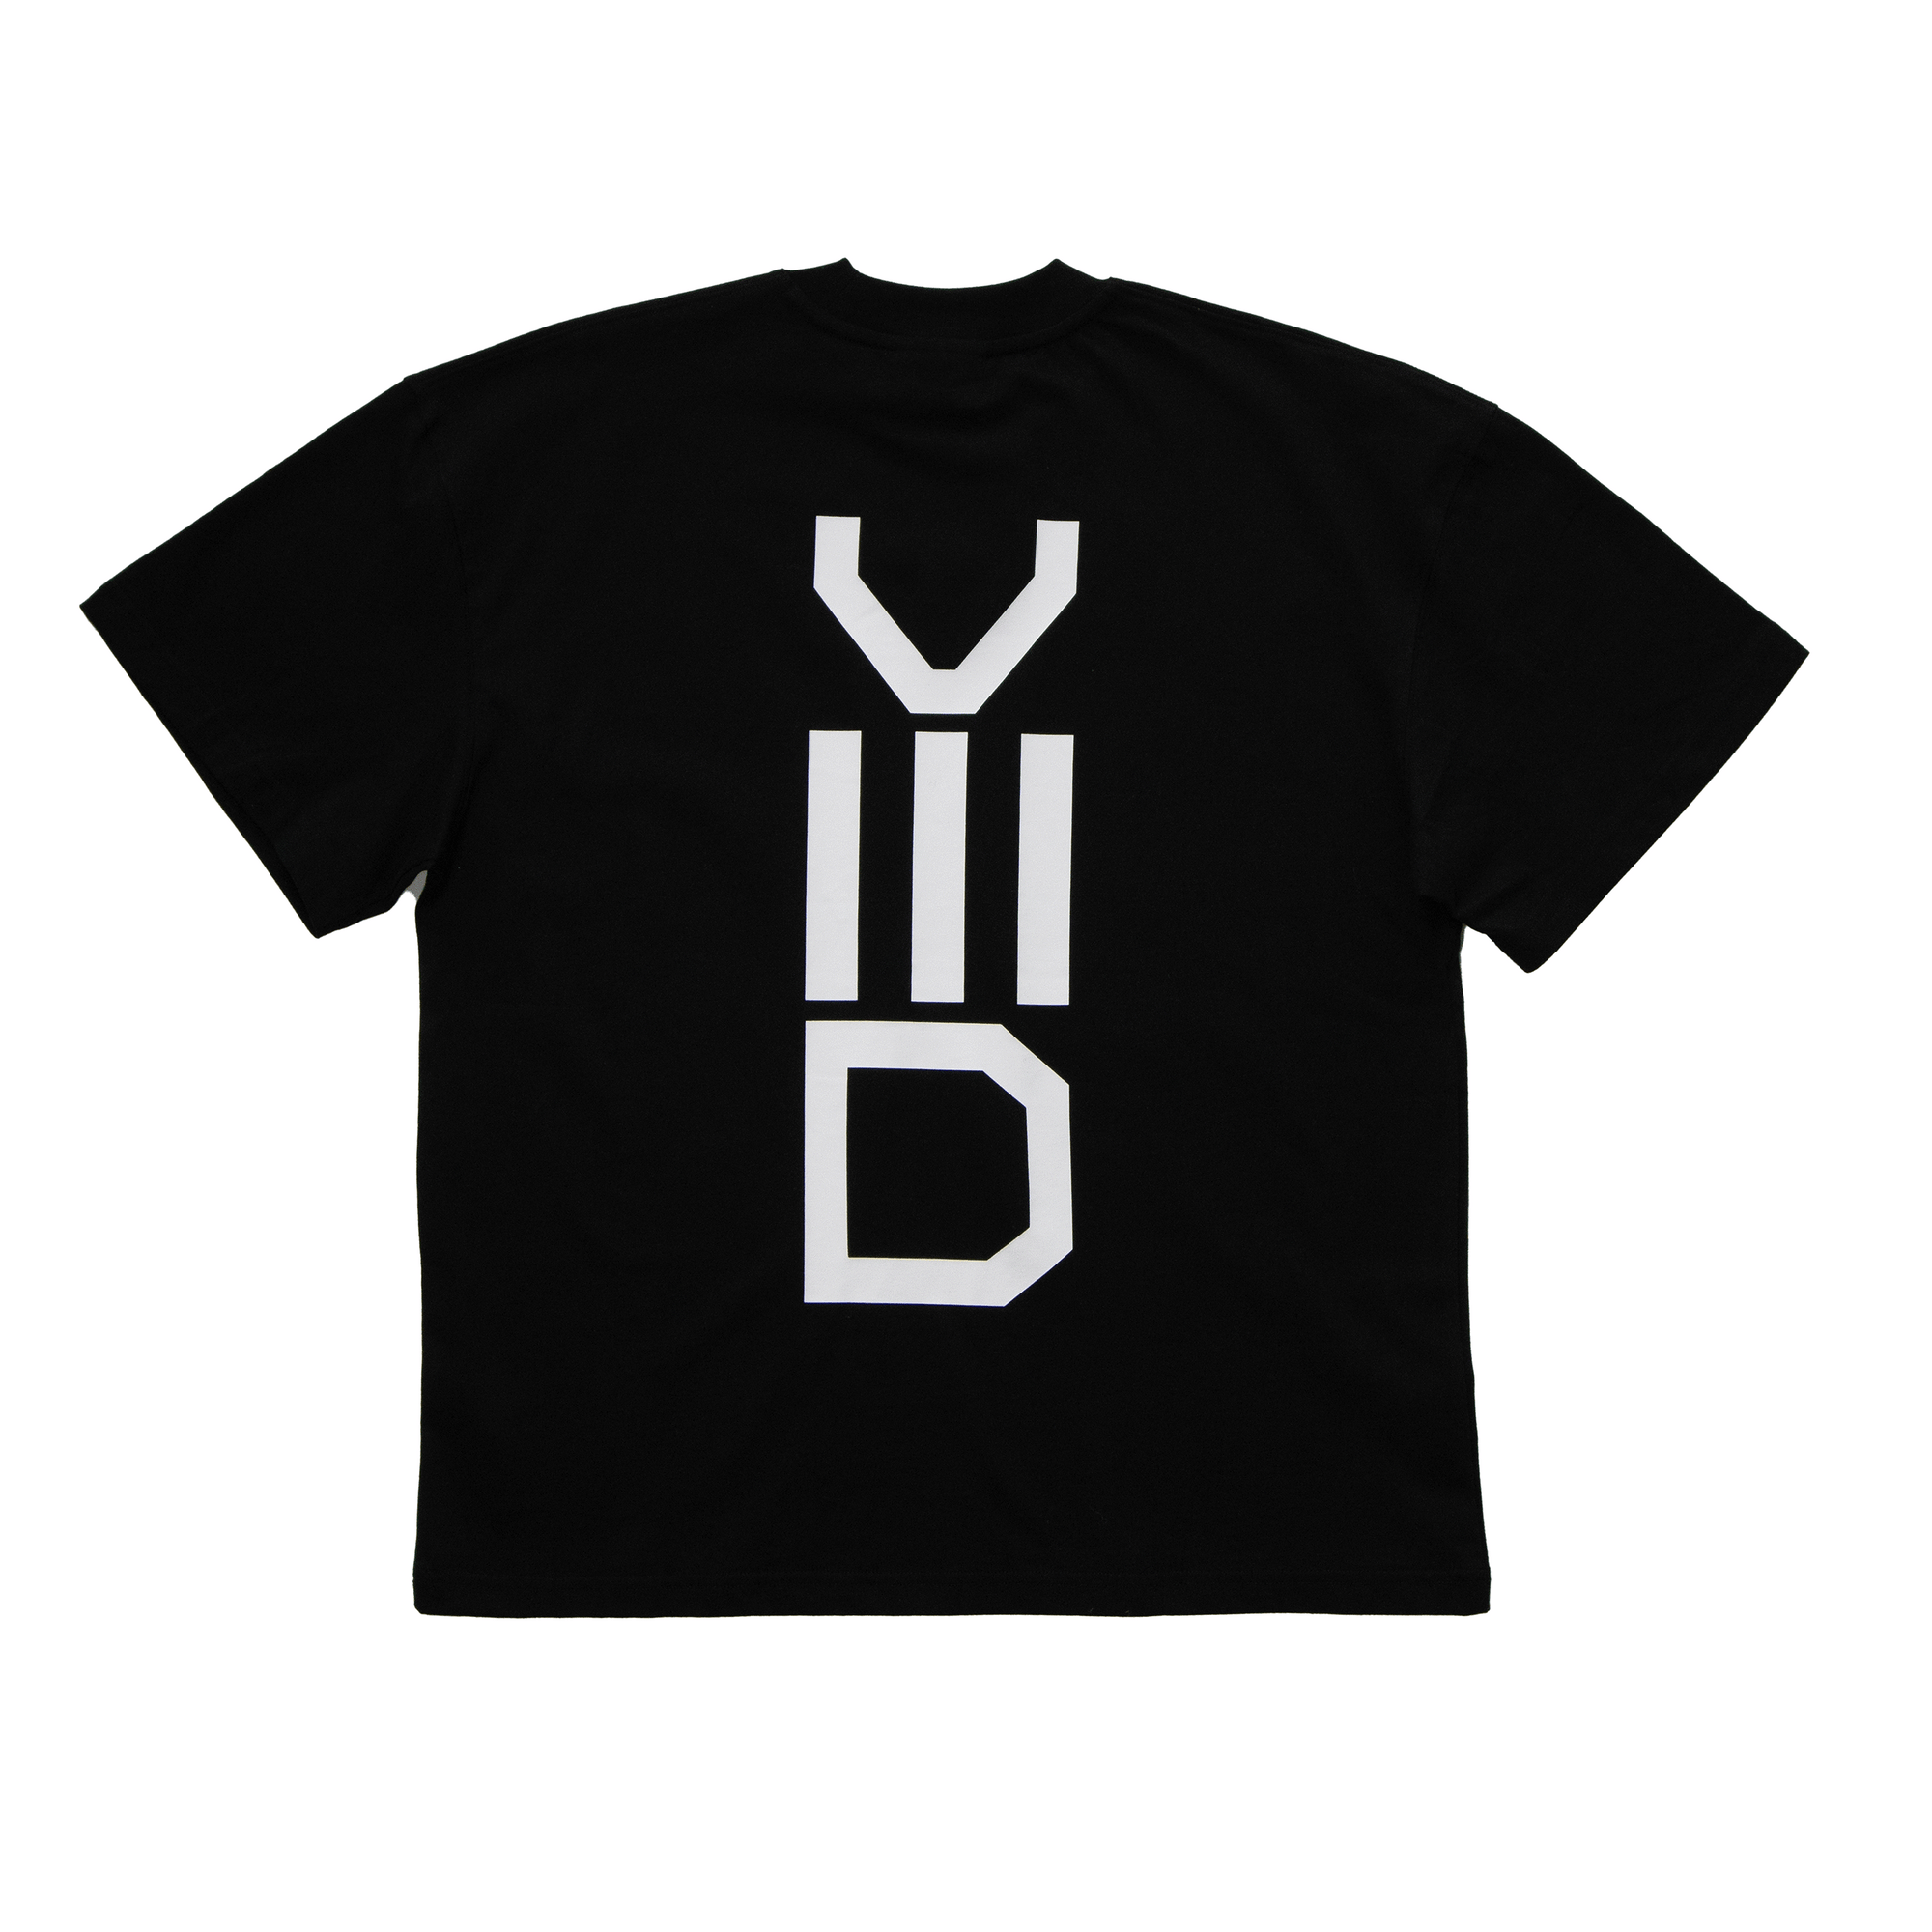 VIIID Short Sleeved T-Shirt